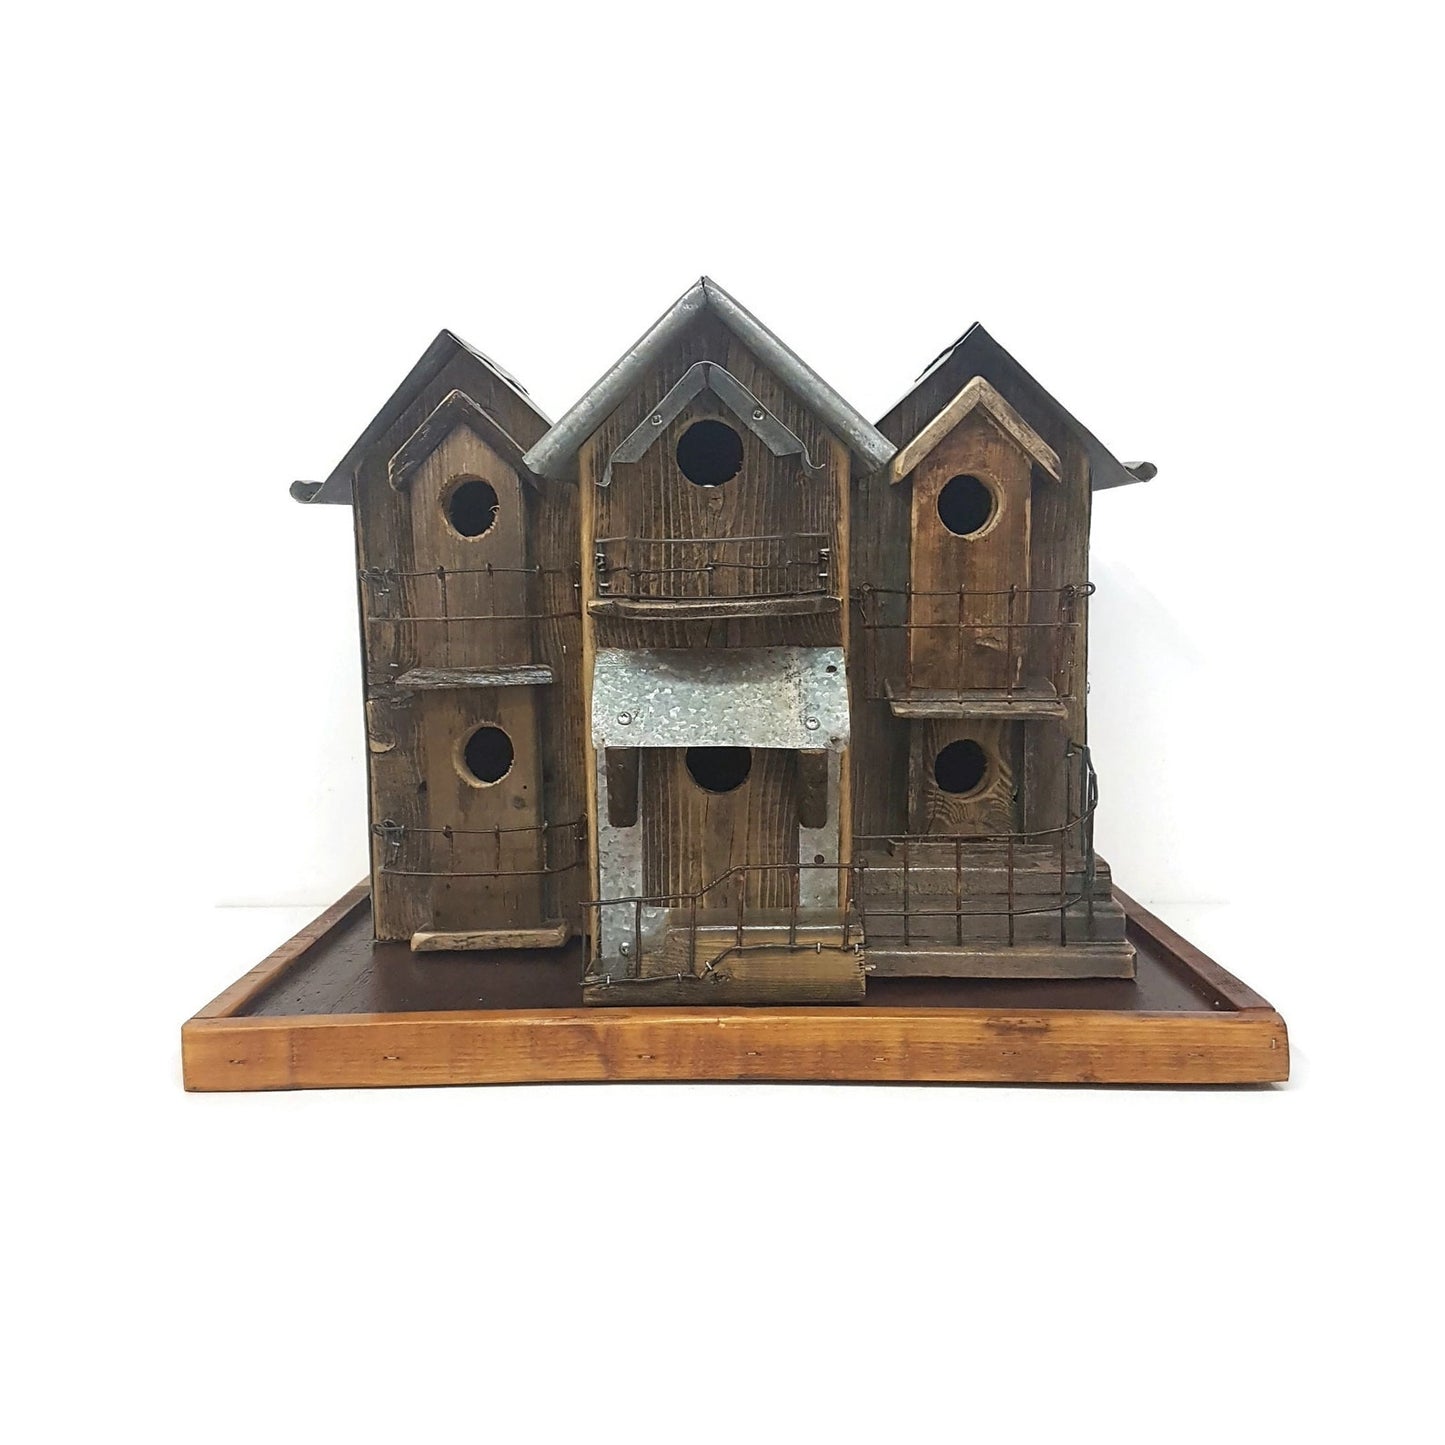 folk-art rustic birdhouse handcrafted country mansion 6 plex birdhouse